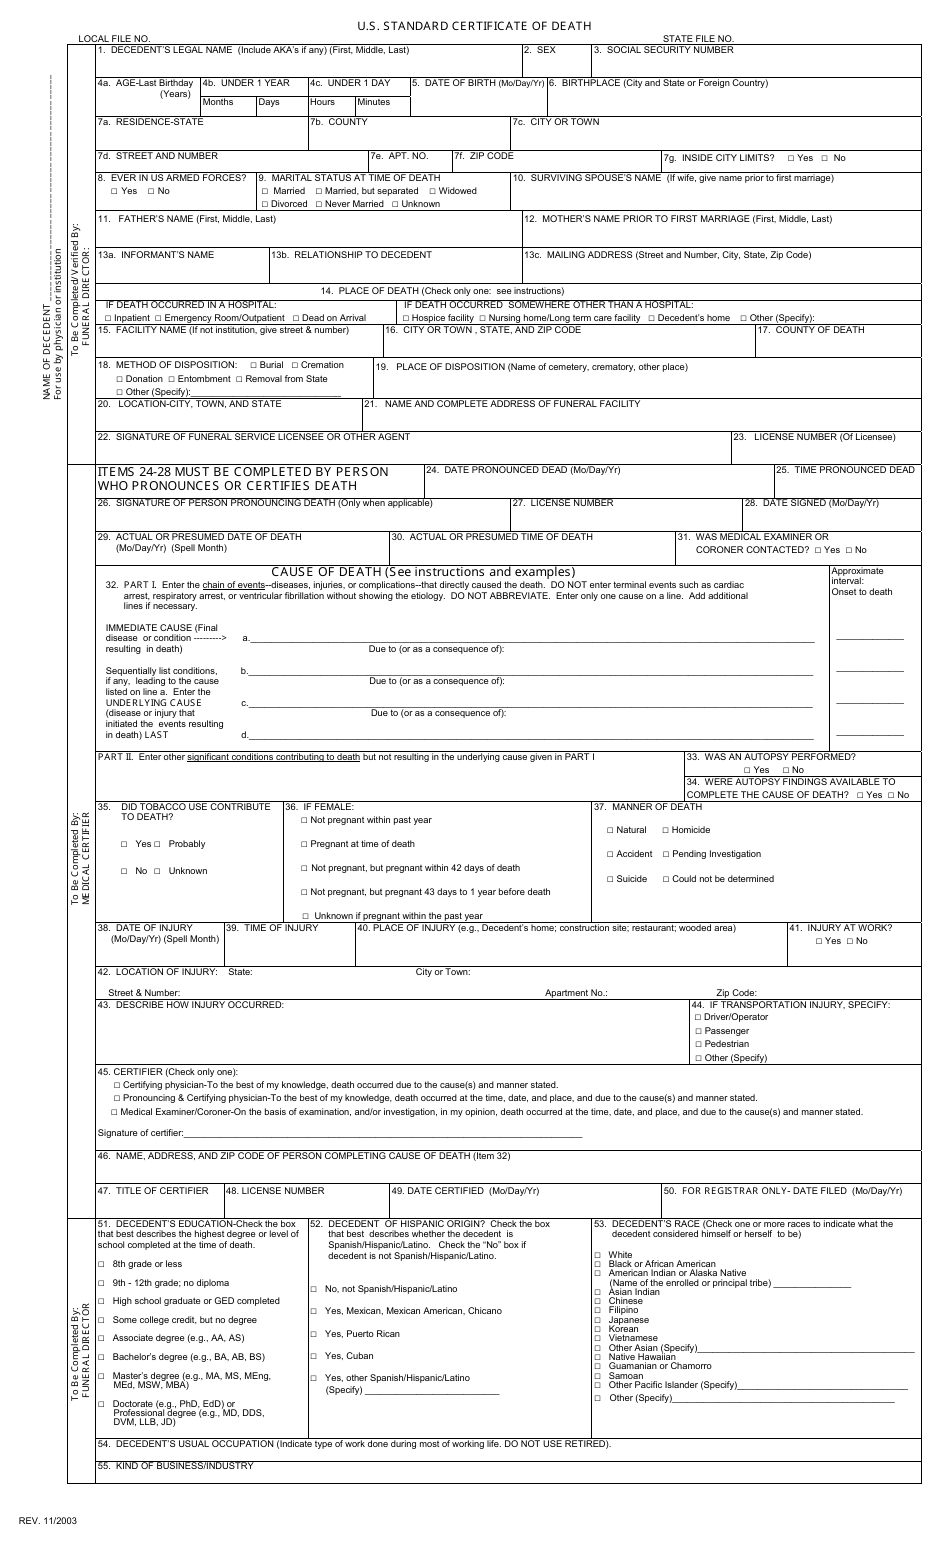 U.S. Standard Certificate of Death, Page 1